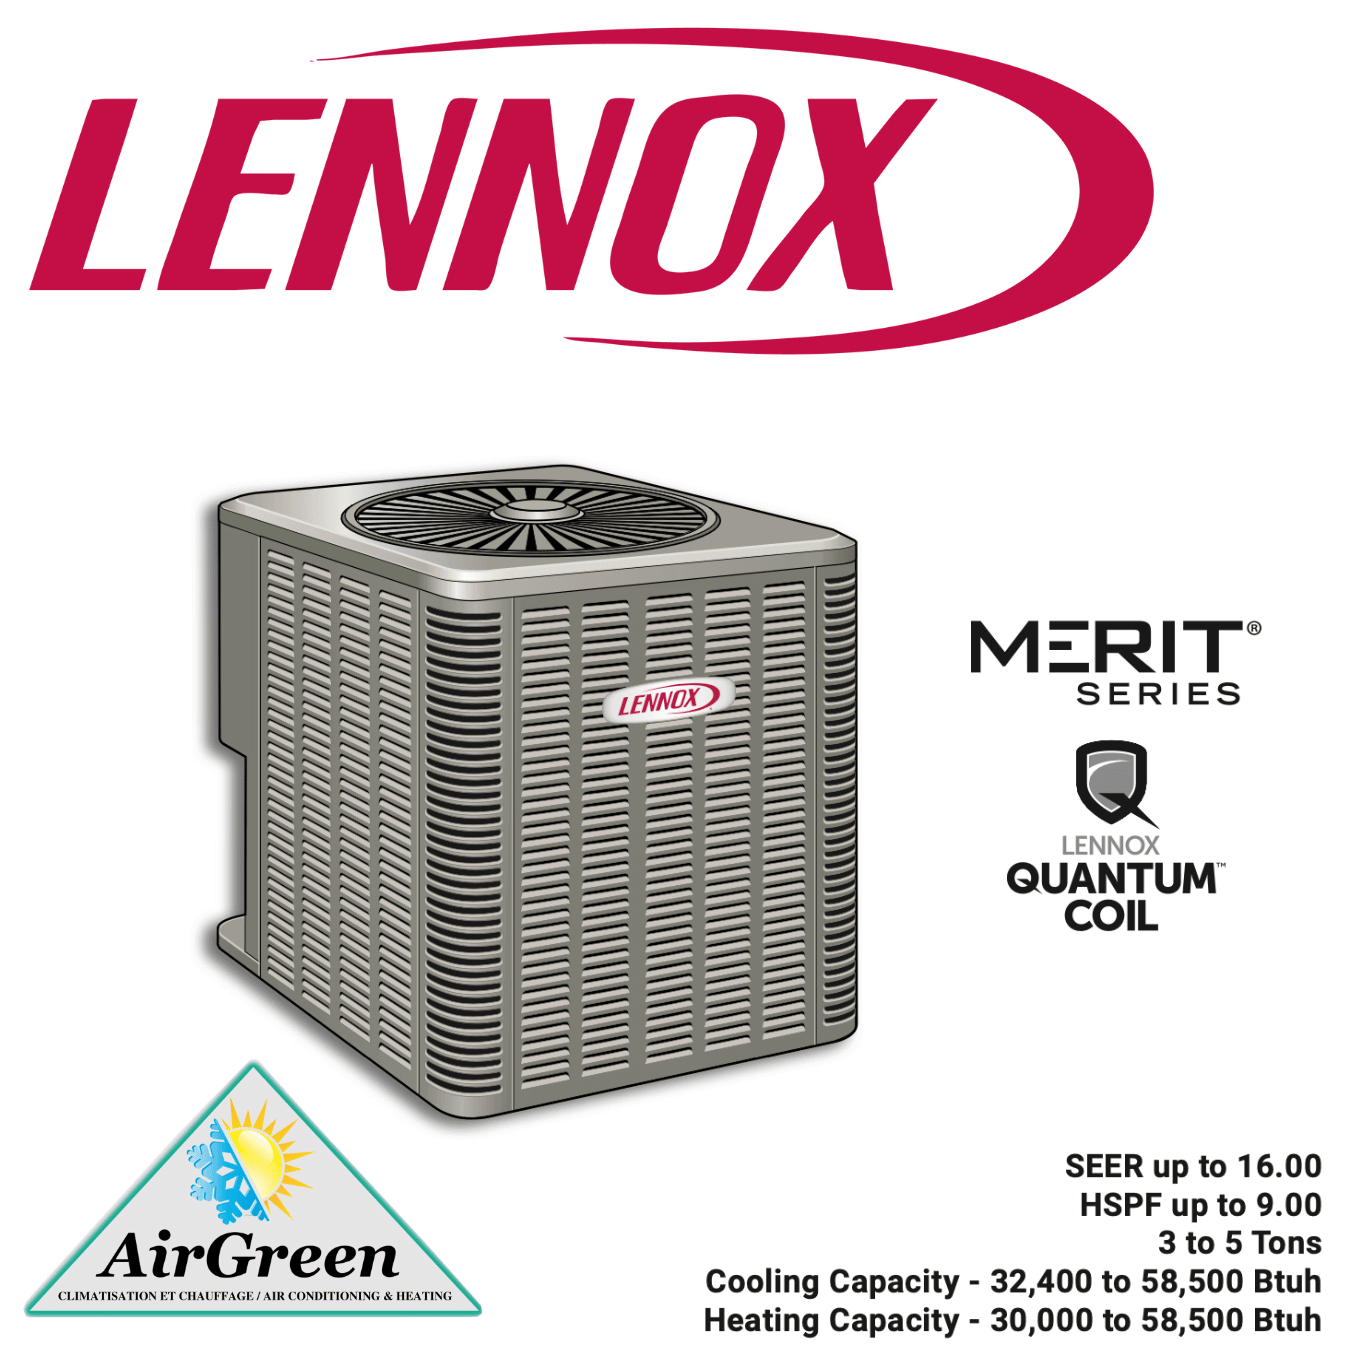 Thermopompe Centrale LENNOX MERIT ML14XP1 4 Tonnes spec sheet with relevant information